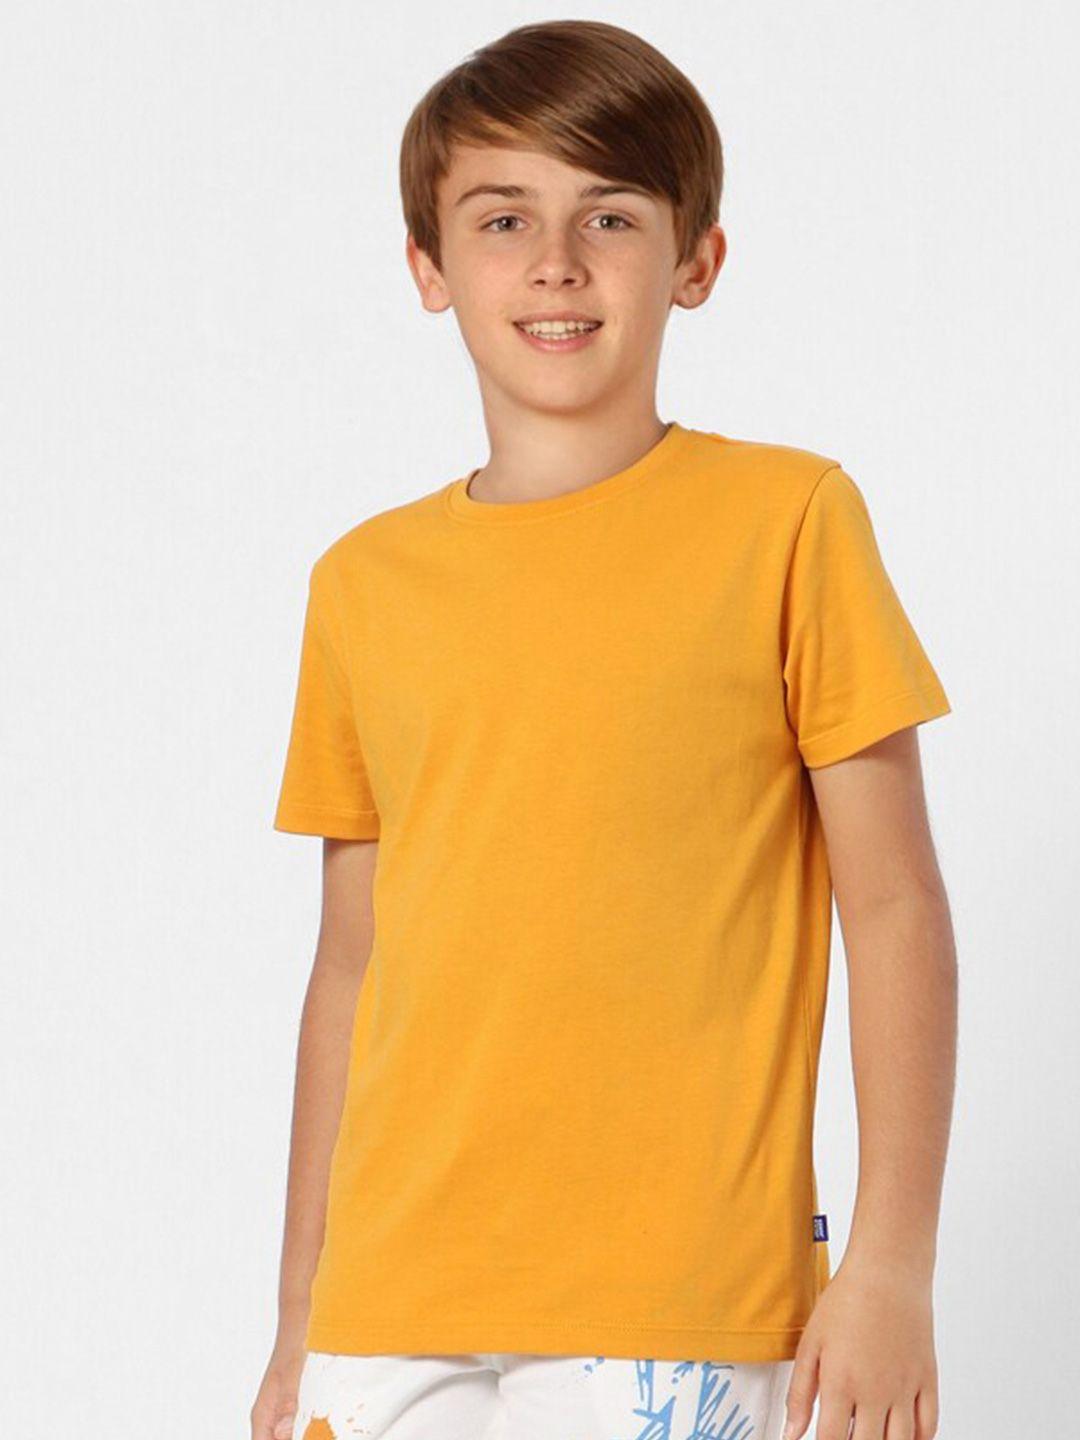 jack & jones boys yellow cotton t-shirt